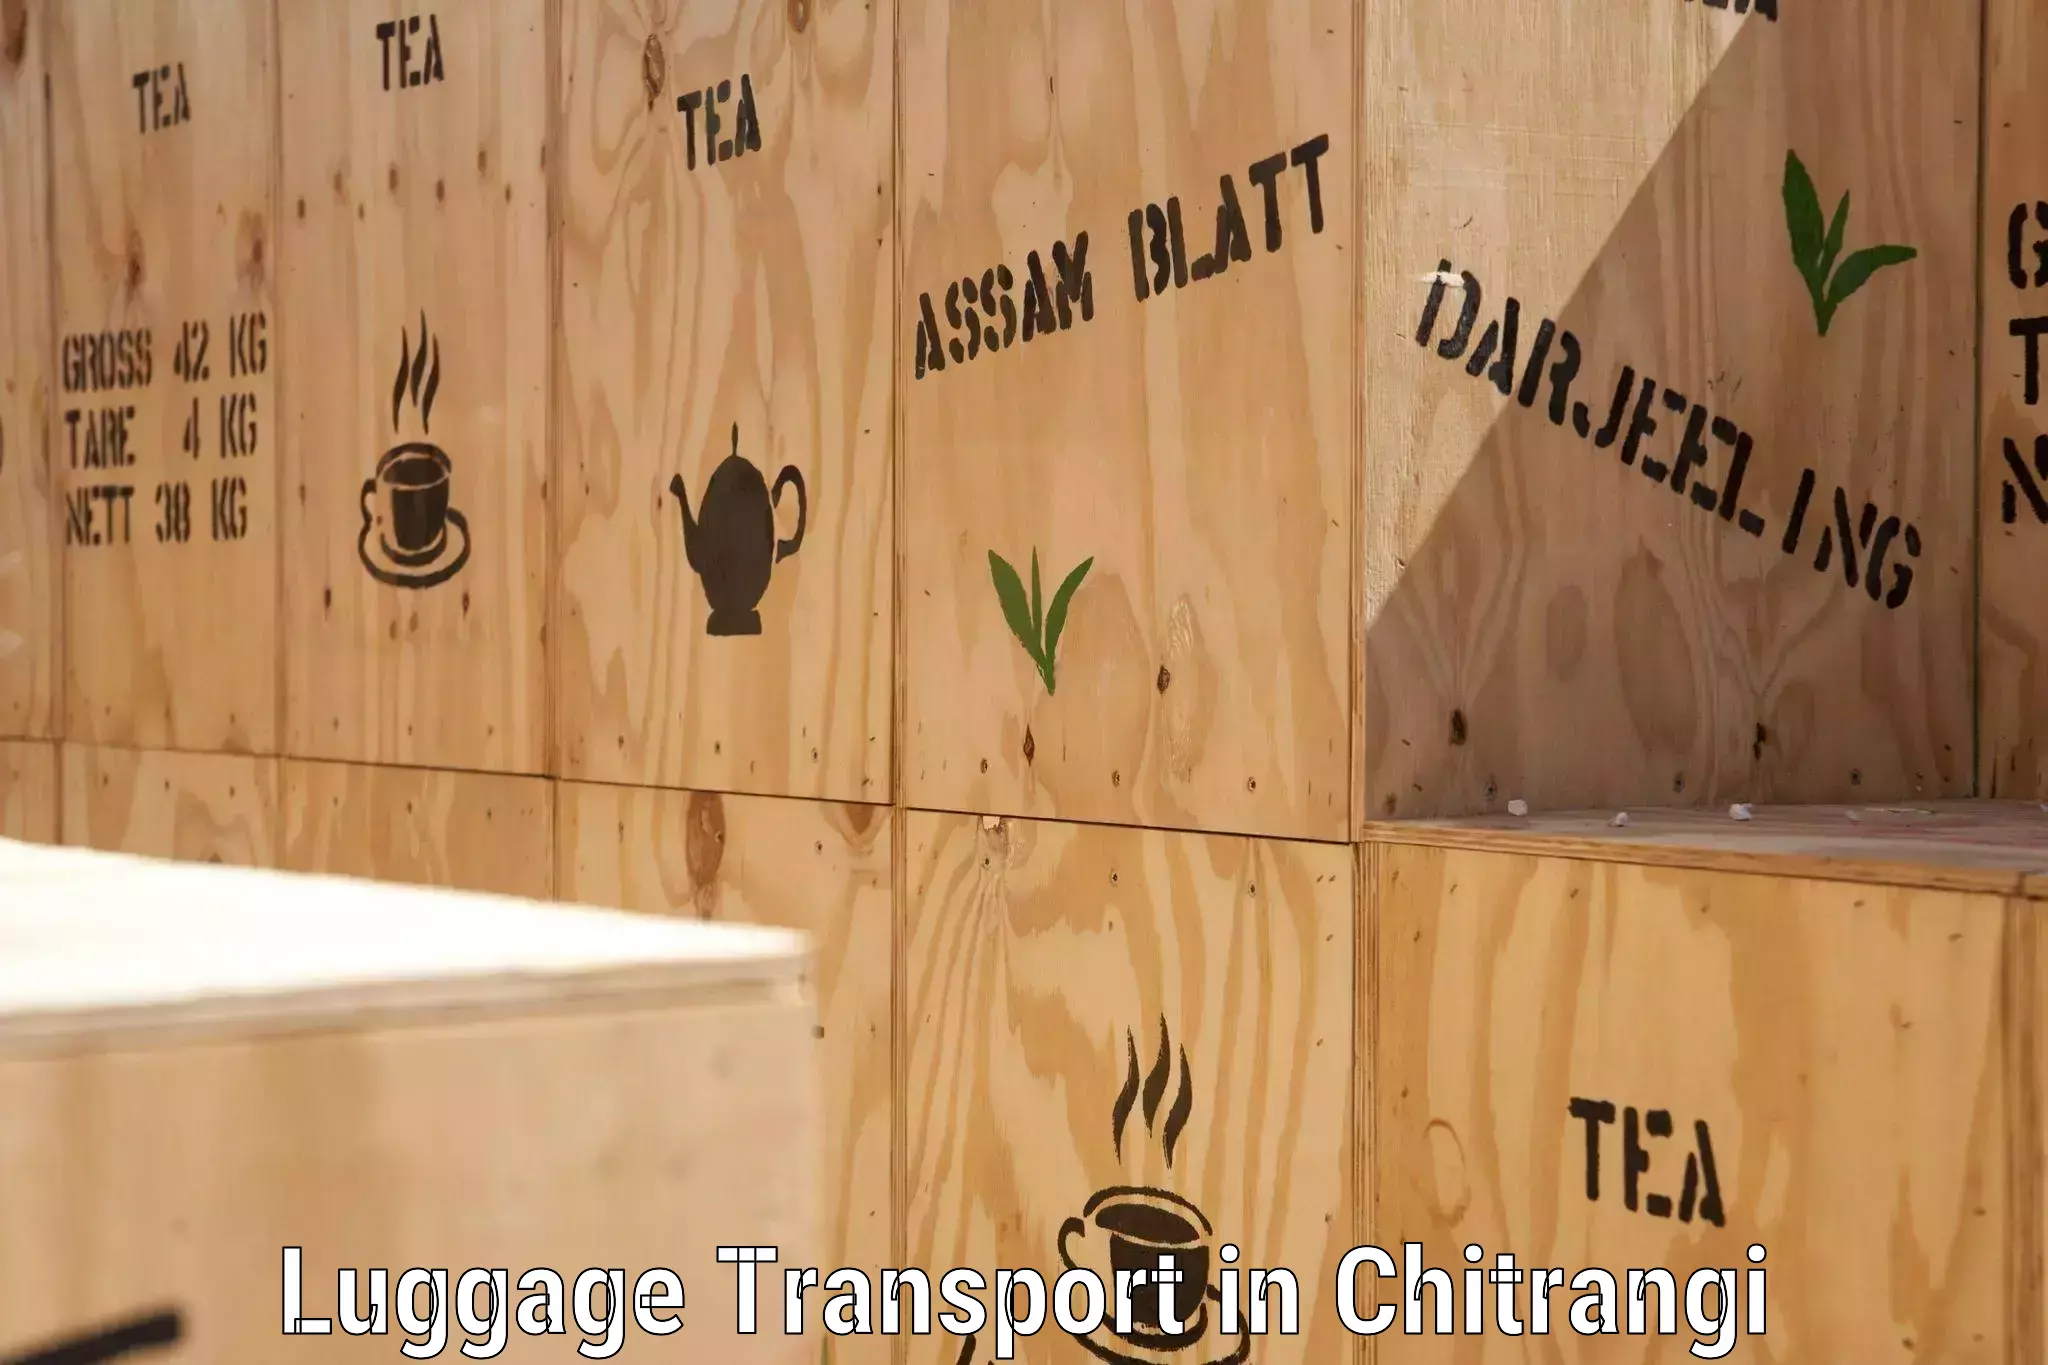 Baggage transport services in Chitrangi